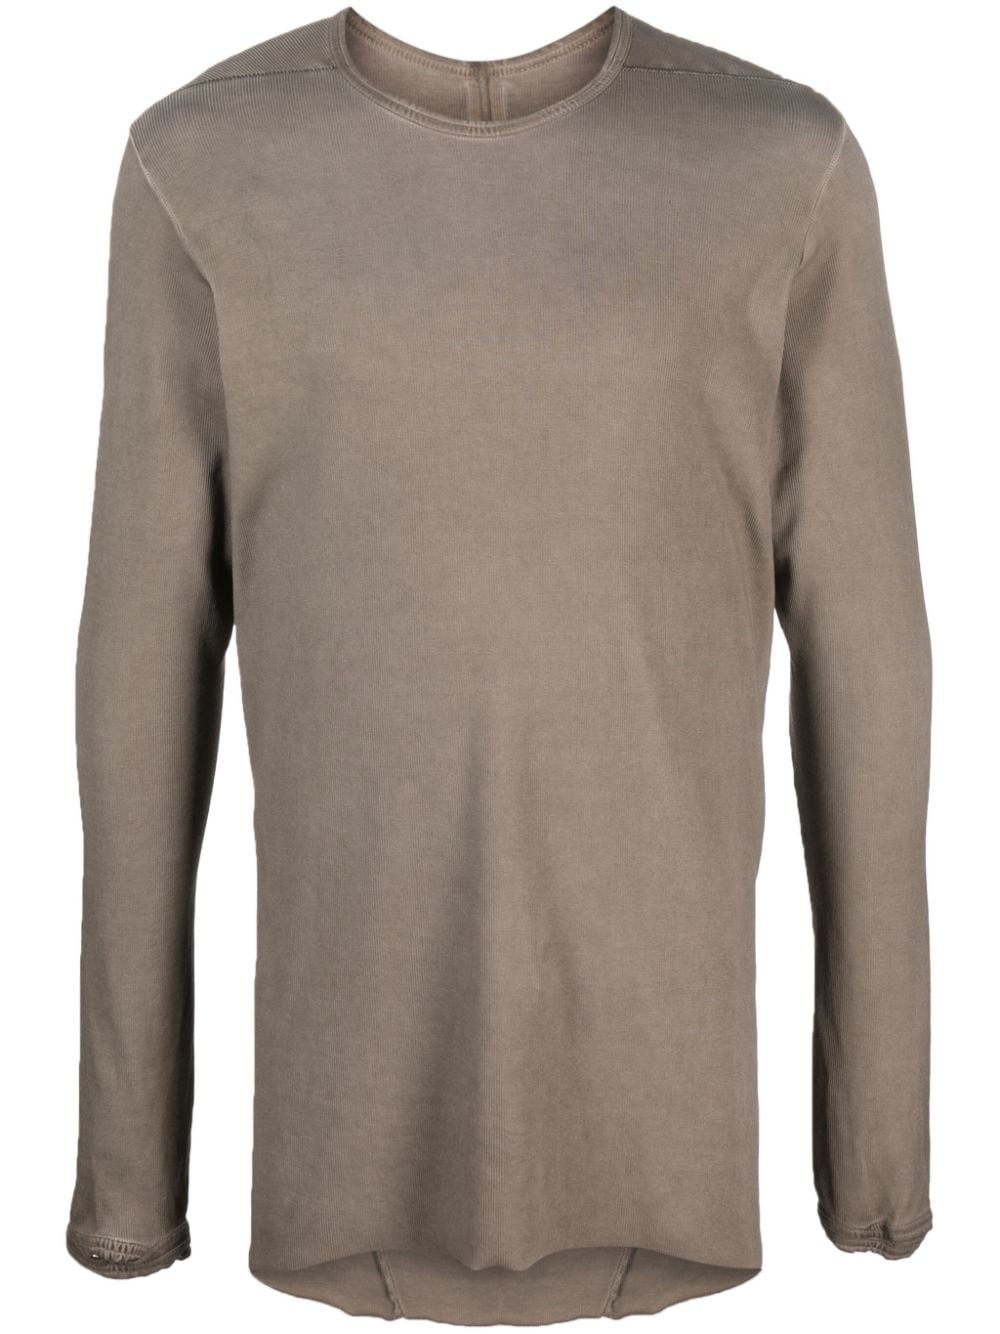 long-sleeve organic cotton sweatshirt